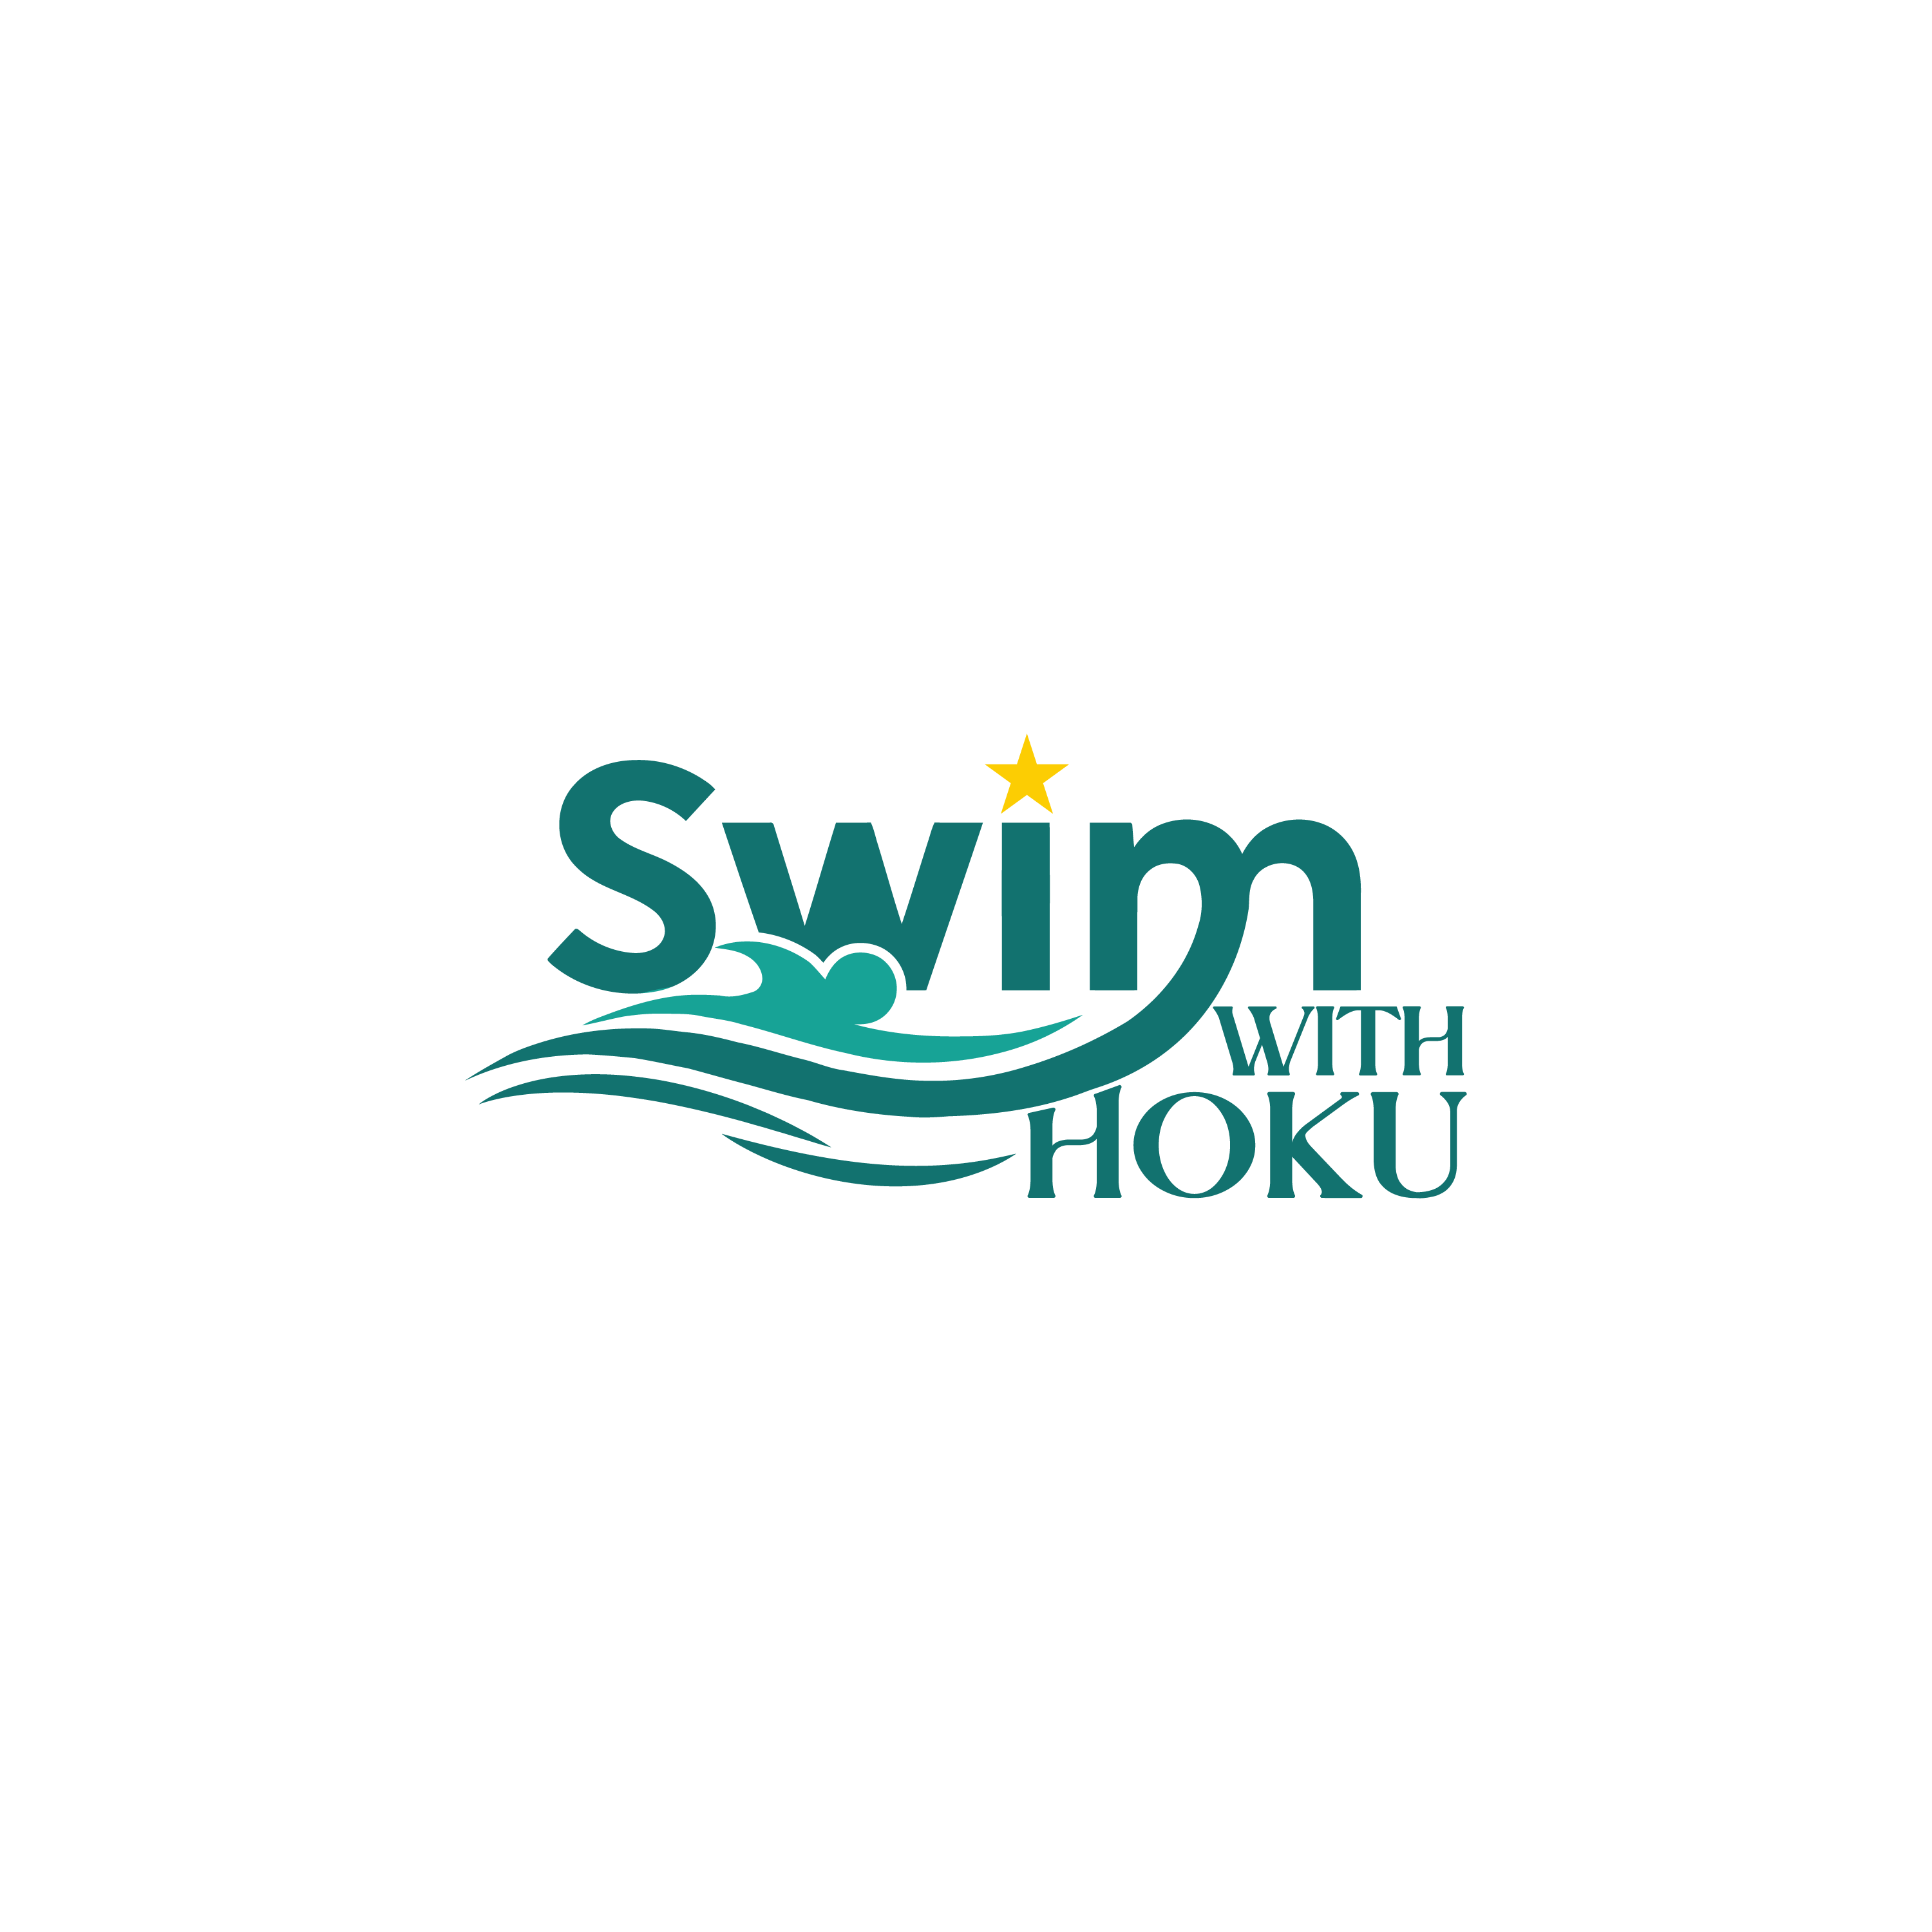 Swim with Hoku offers swim classes on Maui, Hawaii and helps others learn to swim.